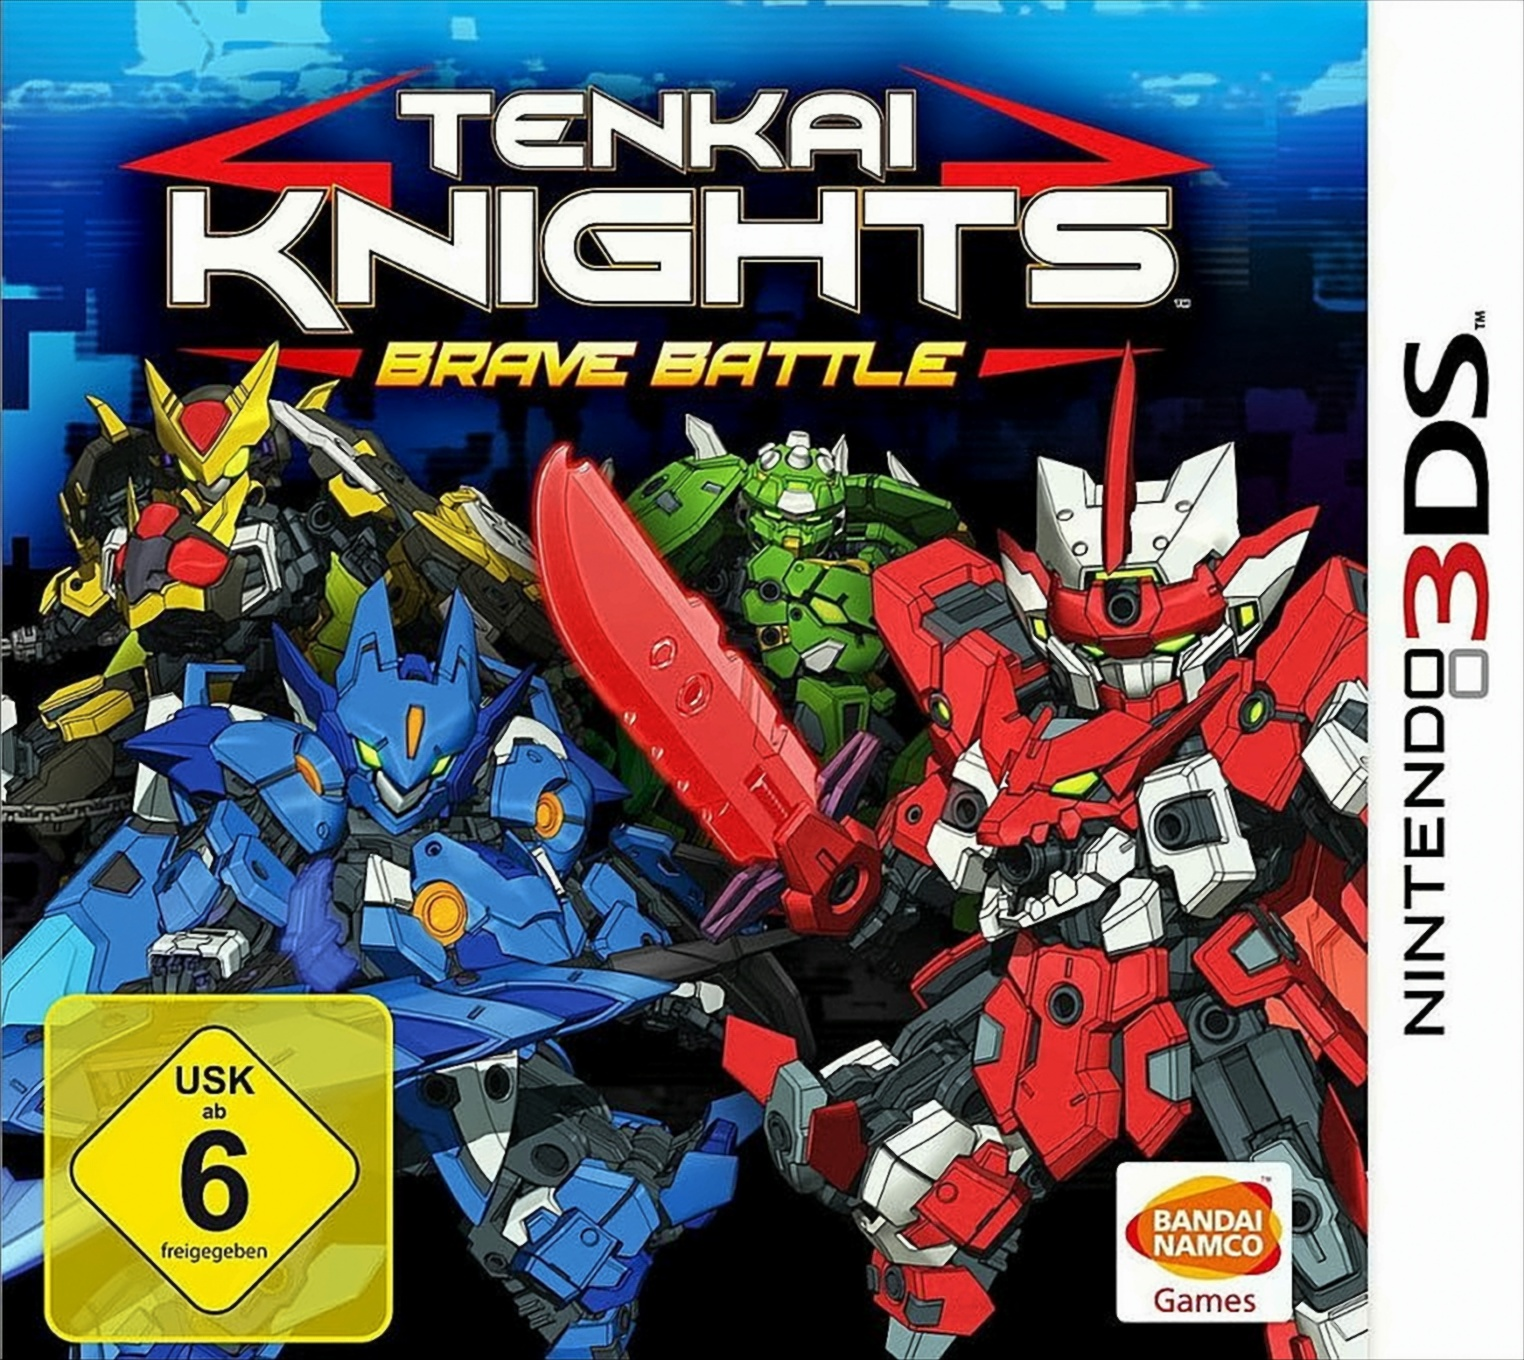 Tenkai Knights: - 3DS] [Nintendo Battle Brave